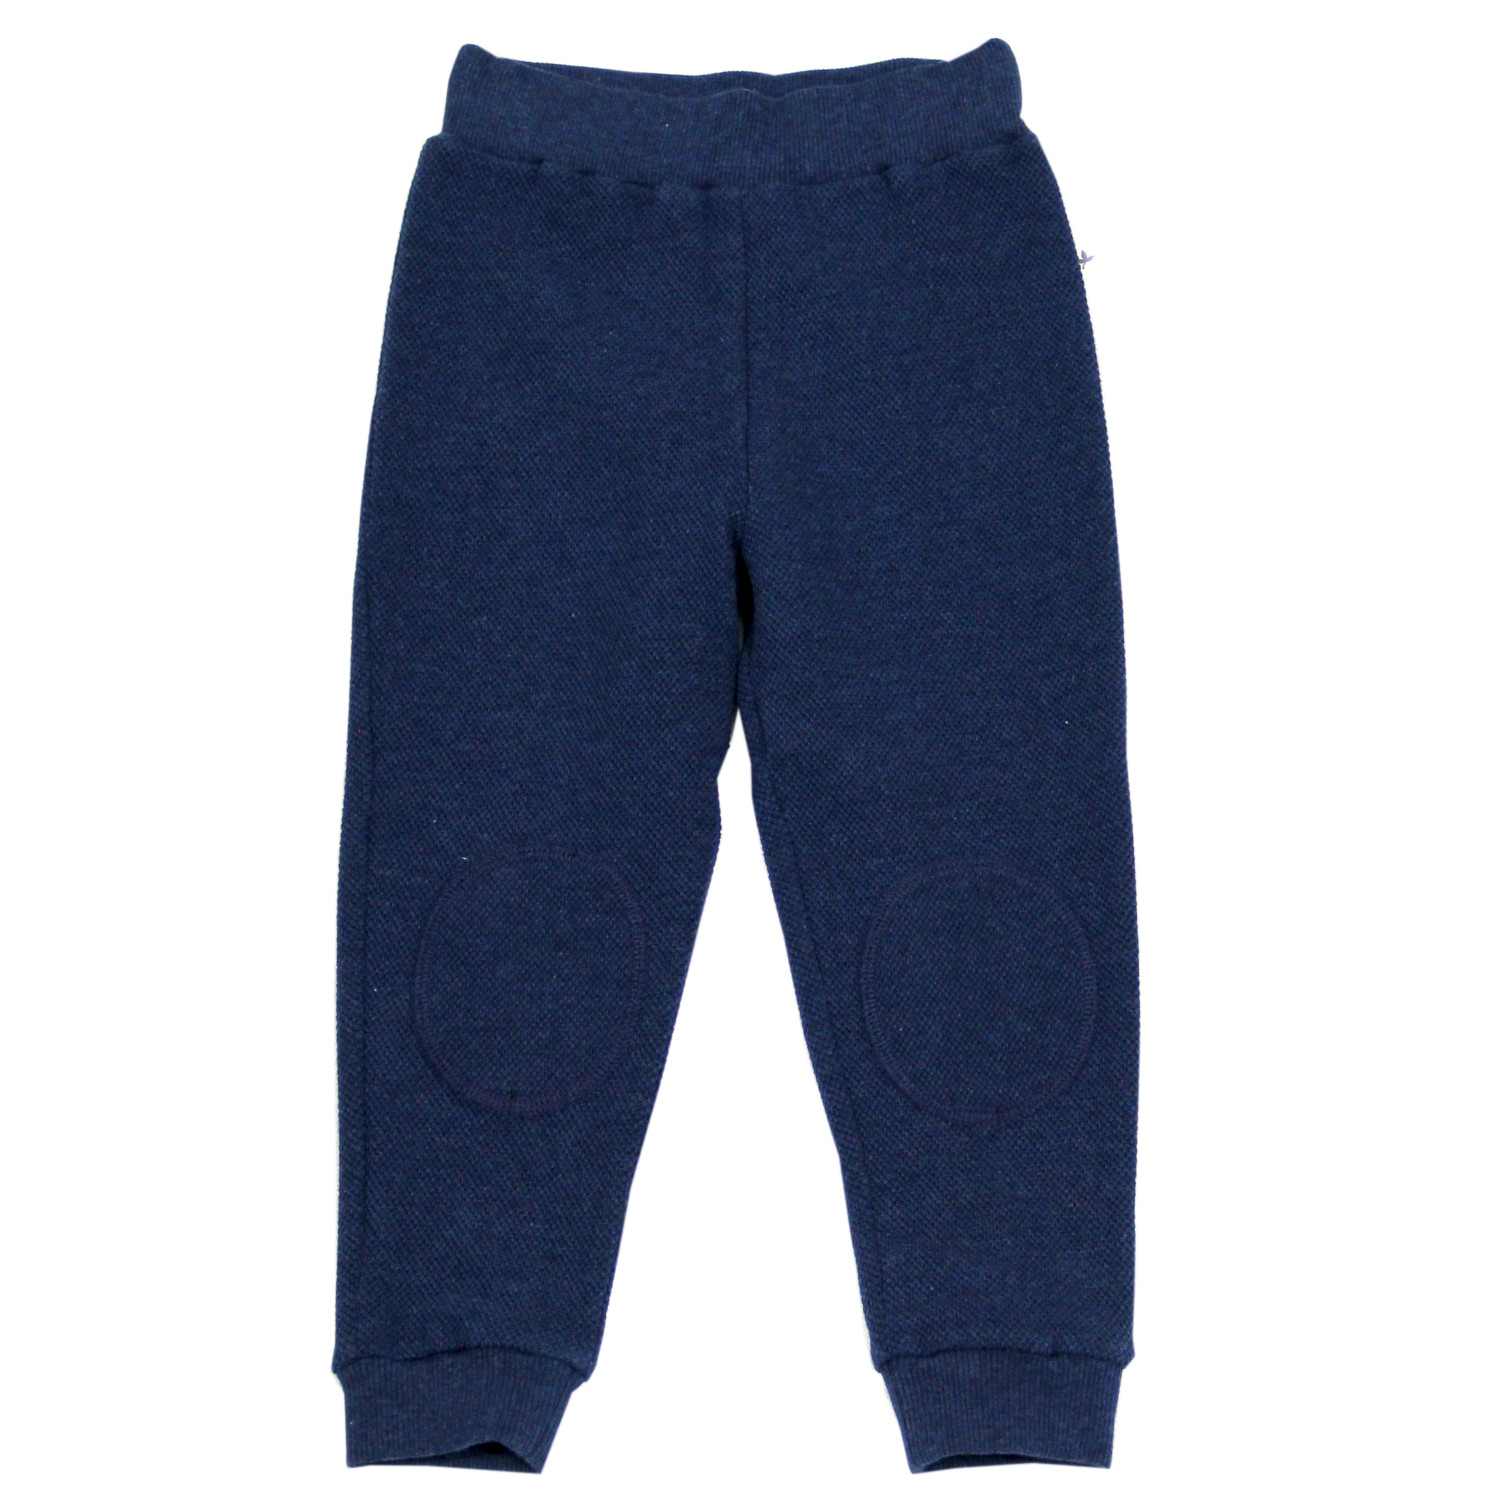 Pantaloni tuta per bambini felpati 100% cotone bio Blu Indaco